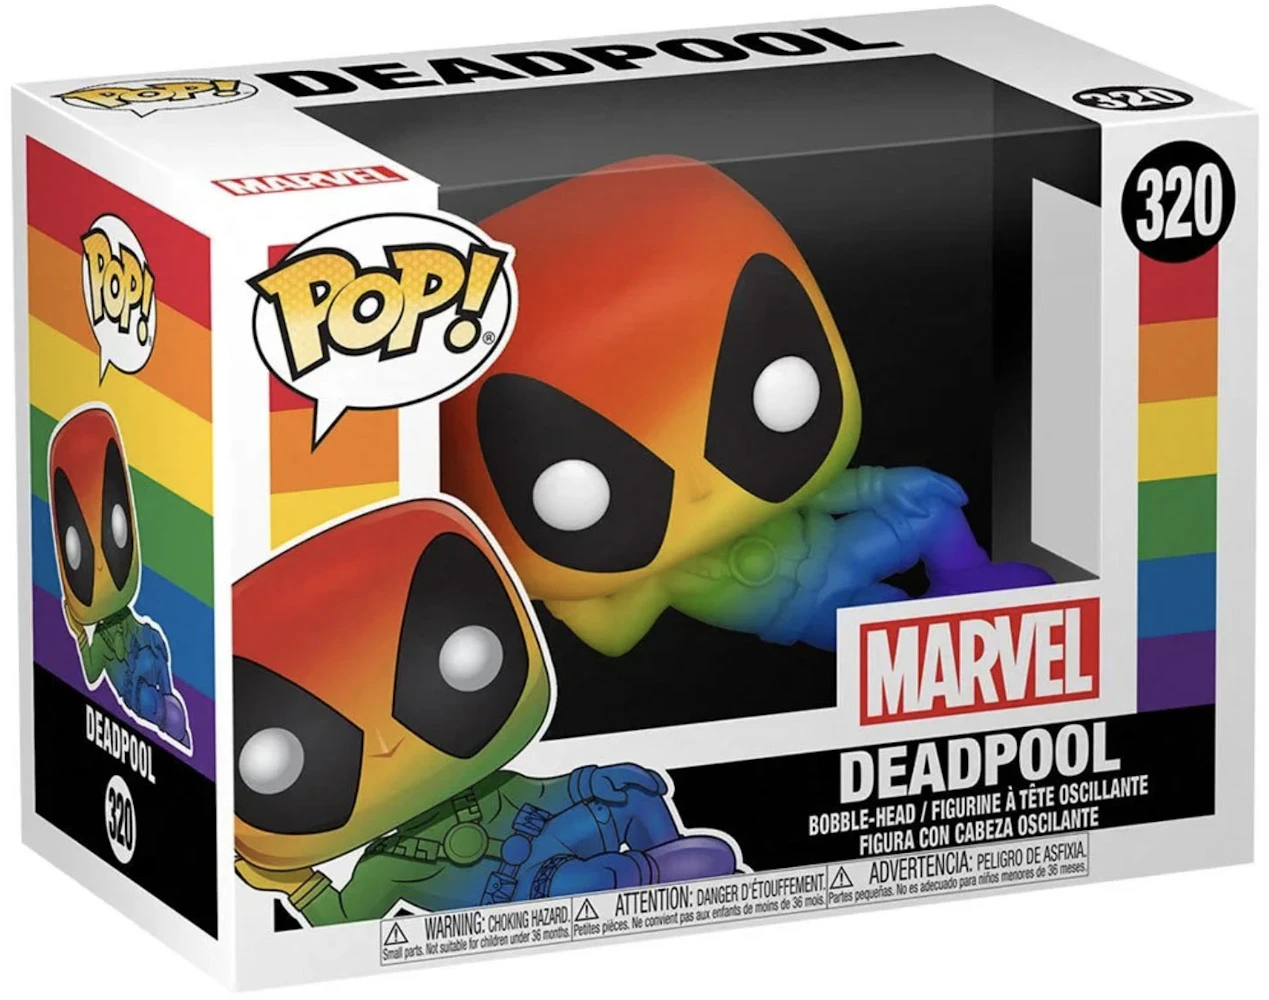 https://images.stockx.com/images/Funko-Pop-Marvel-Pride-Deadpool-Rainbow-Figure-320.jpg?fit=fill&bg=FFFFFF&w=700&h=500&fm=webp&auto=compress&q=90&dpr=2&trim=color&updated_at=1620418318